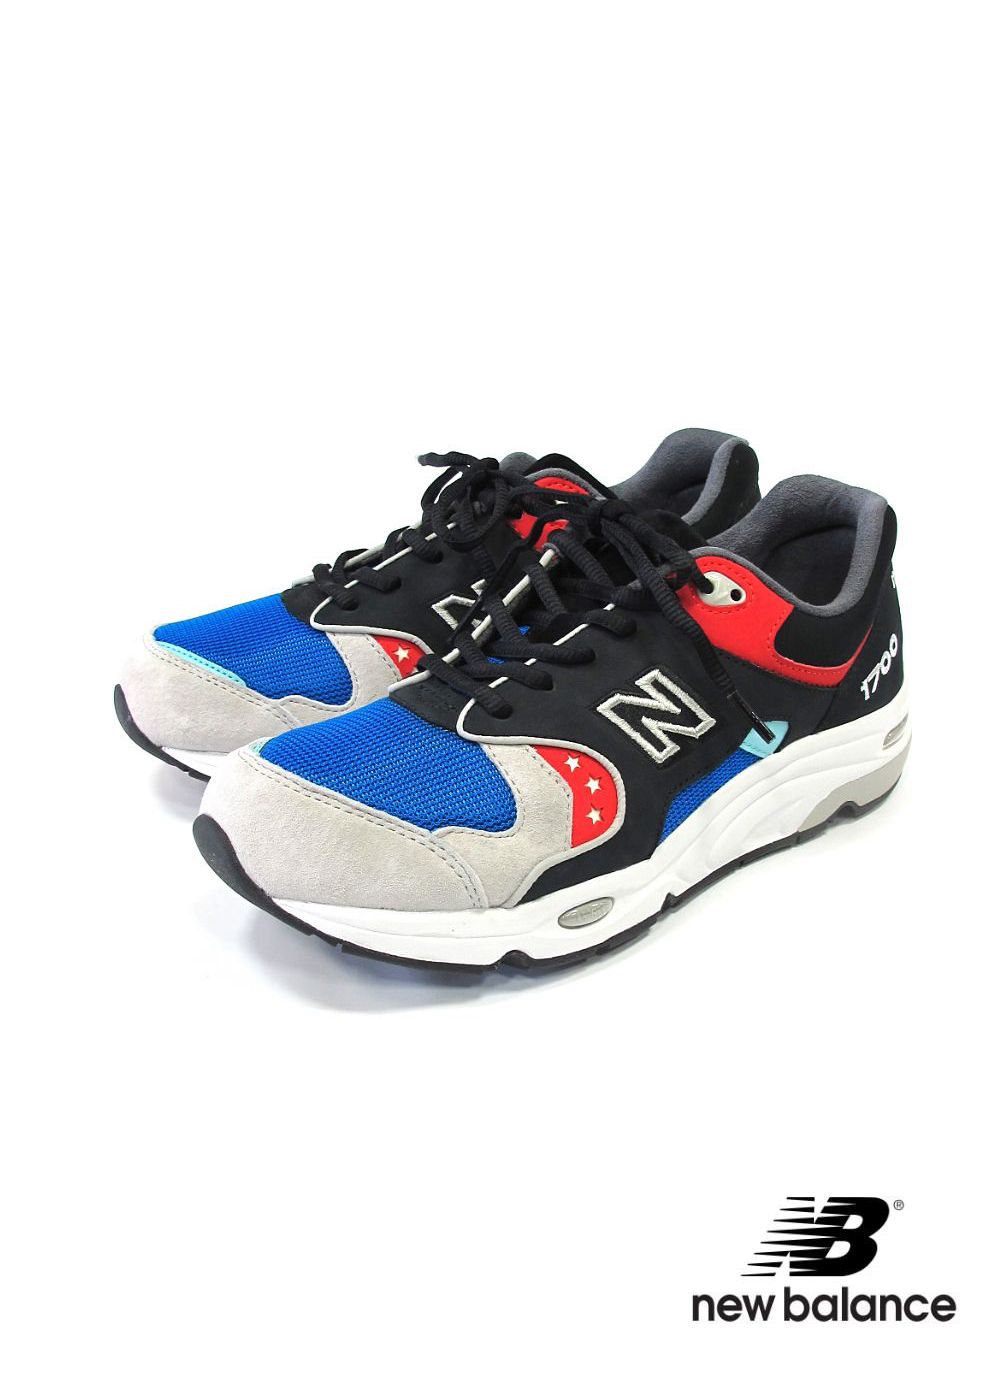 NEW BALANCE CM1700MI x mita sneakers / ニューバランス&ミタスニーカーズ コラボスニーカー - US-8  (26cm)